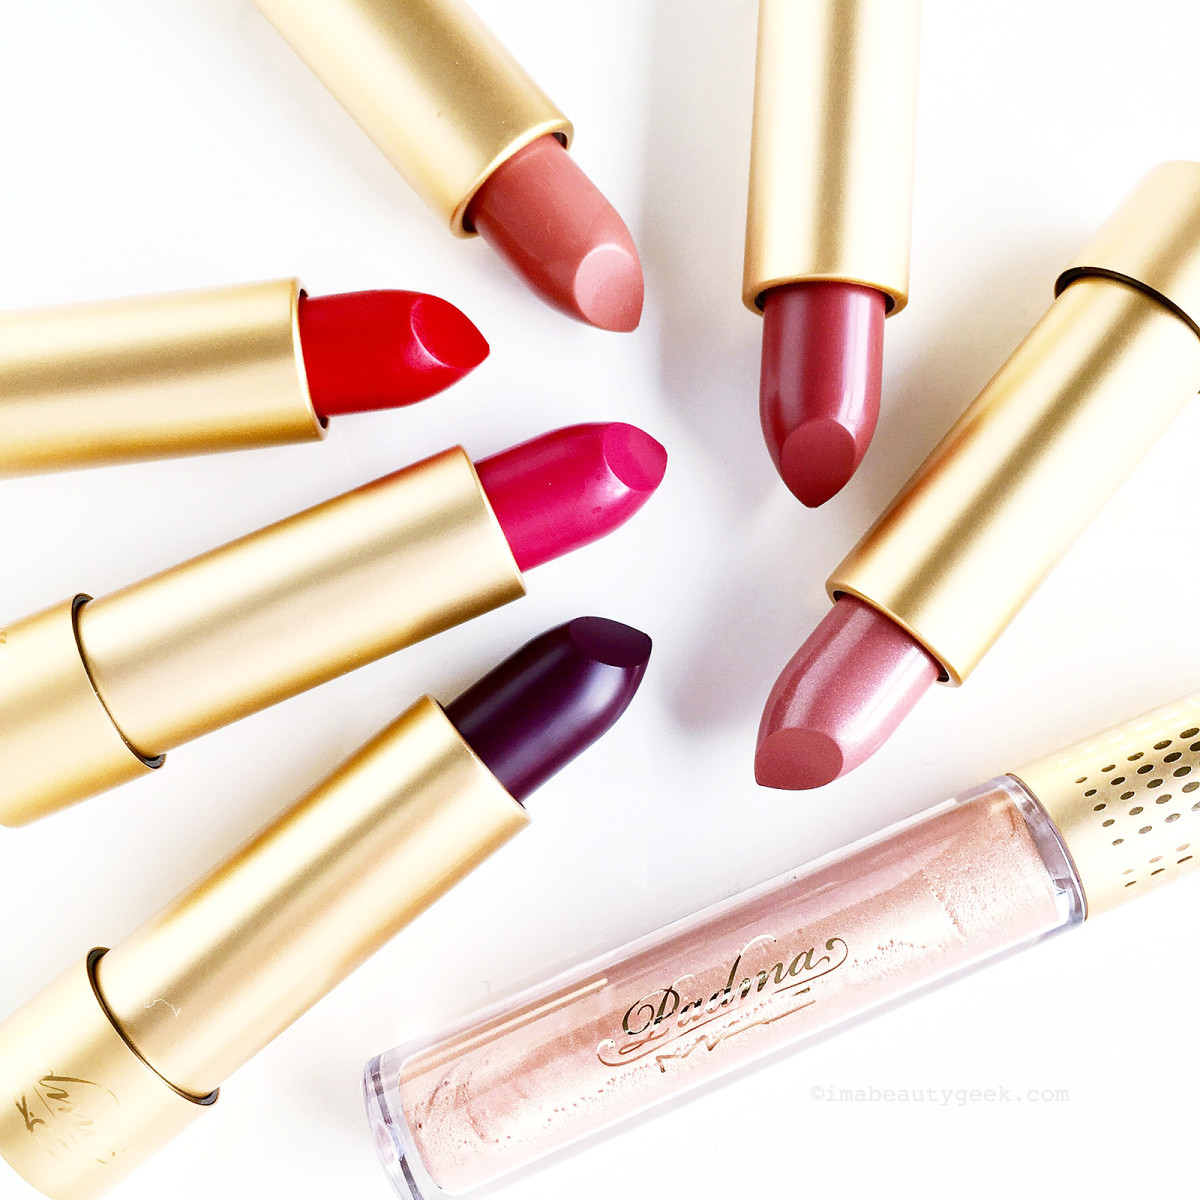 MAC Padma Lakshmi lipstick in Sumac, Mittai Pink, Blue Blood, Apricot Gold, Sunset Rose, Nude Fudge and Creamsheen Glass in Nefertiti